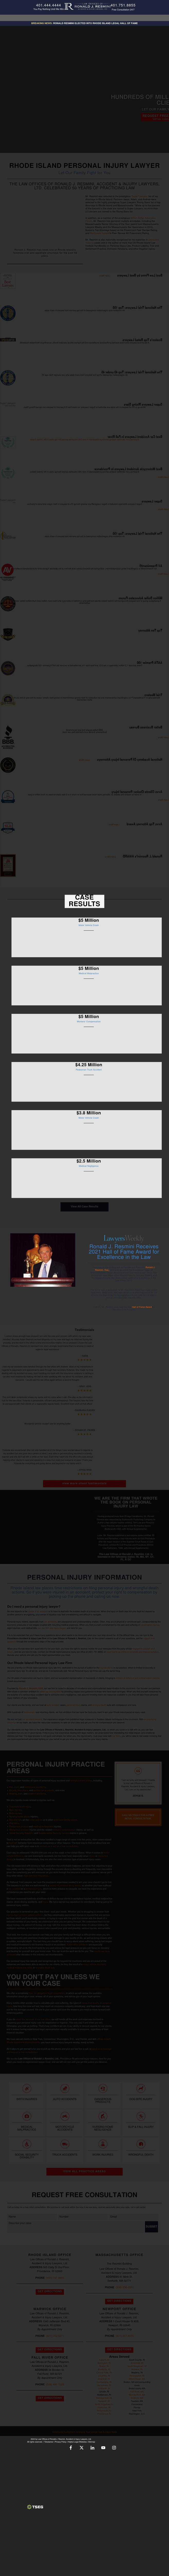 Ronald J. Resmini Law Offices, Ltd. - Providence RI Lawyers